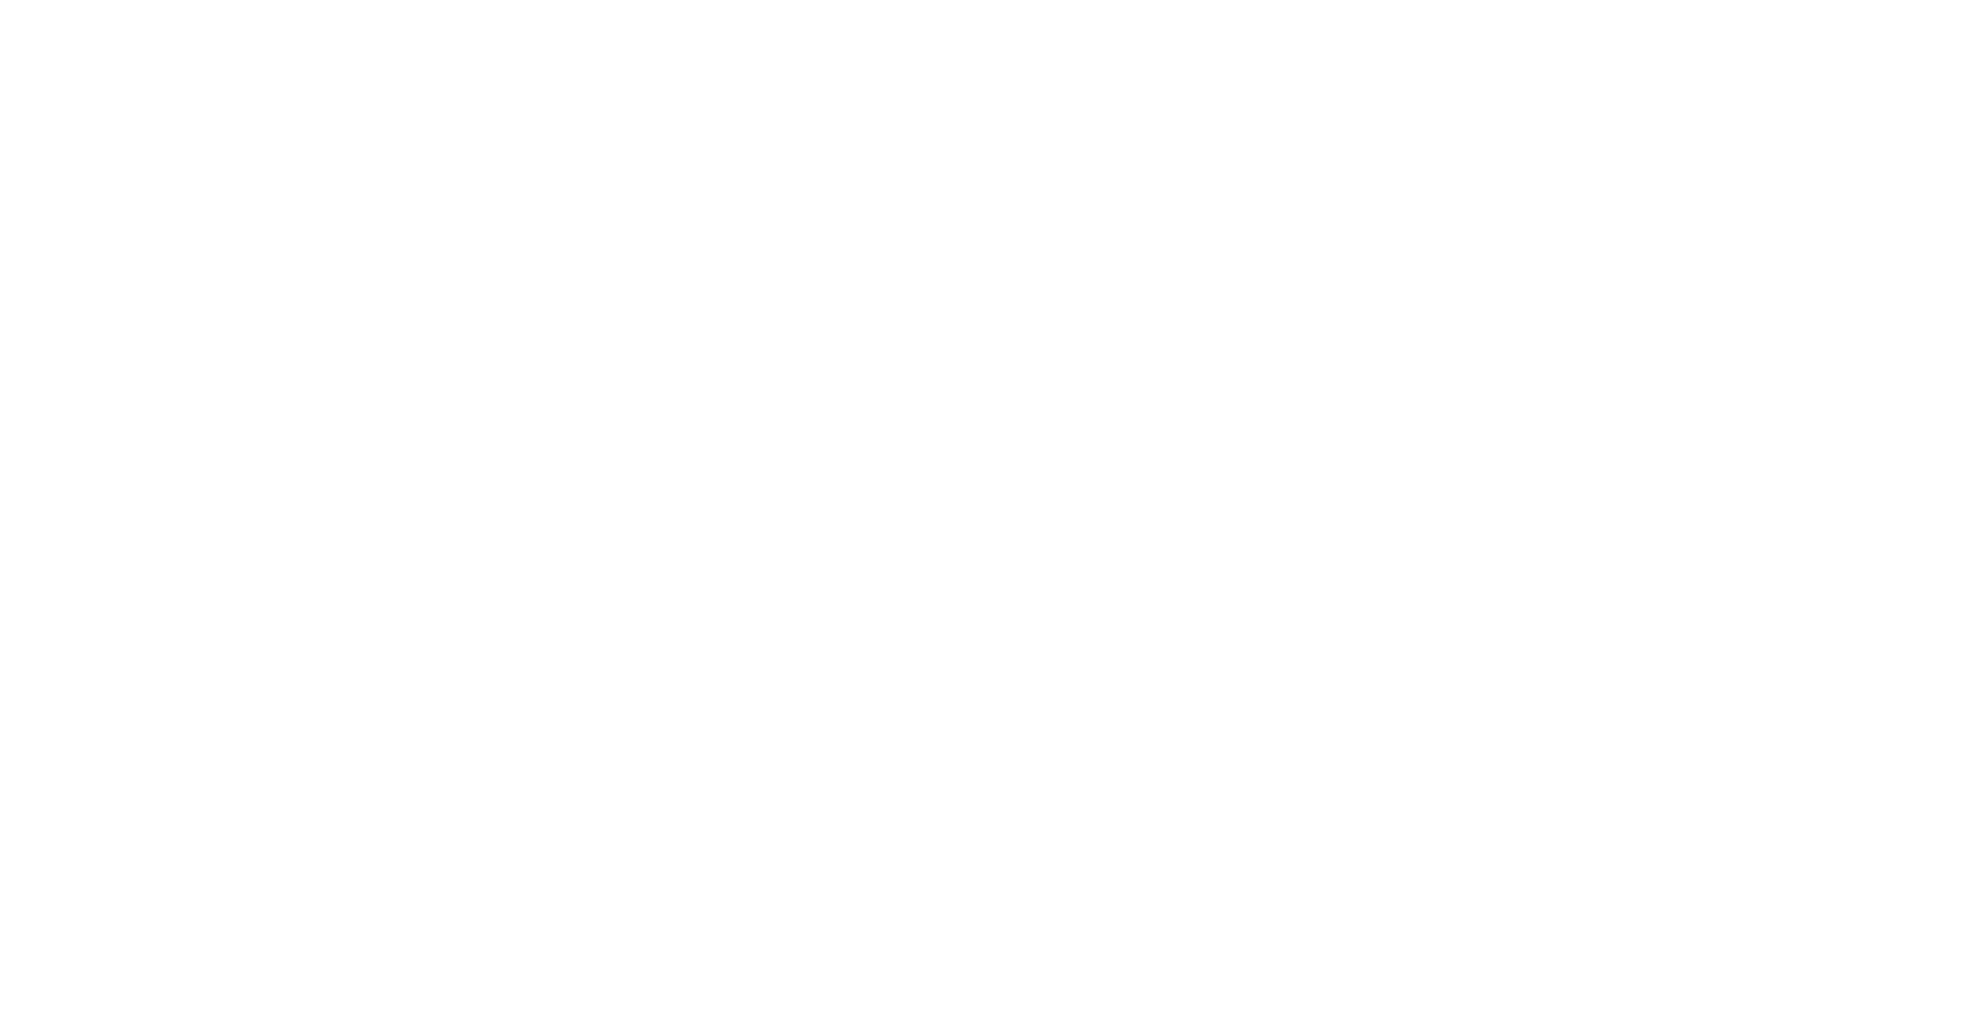 Makeup Studio Training Center